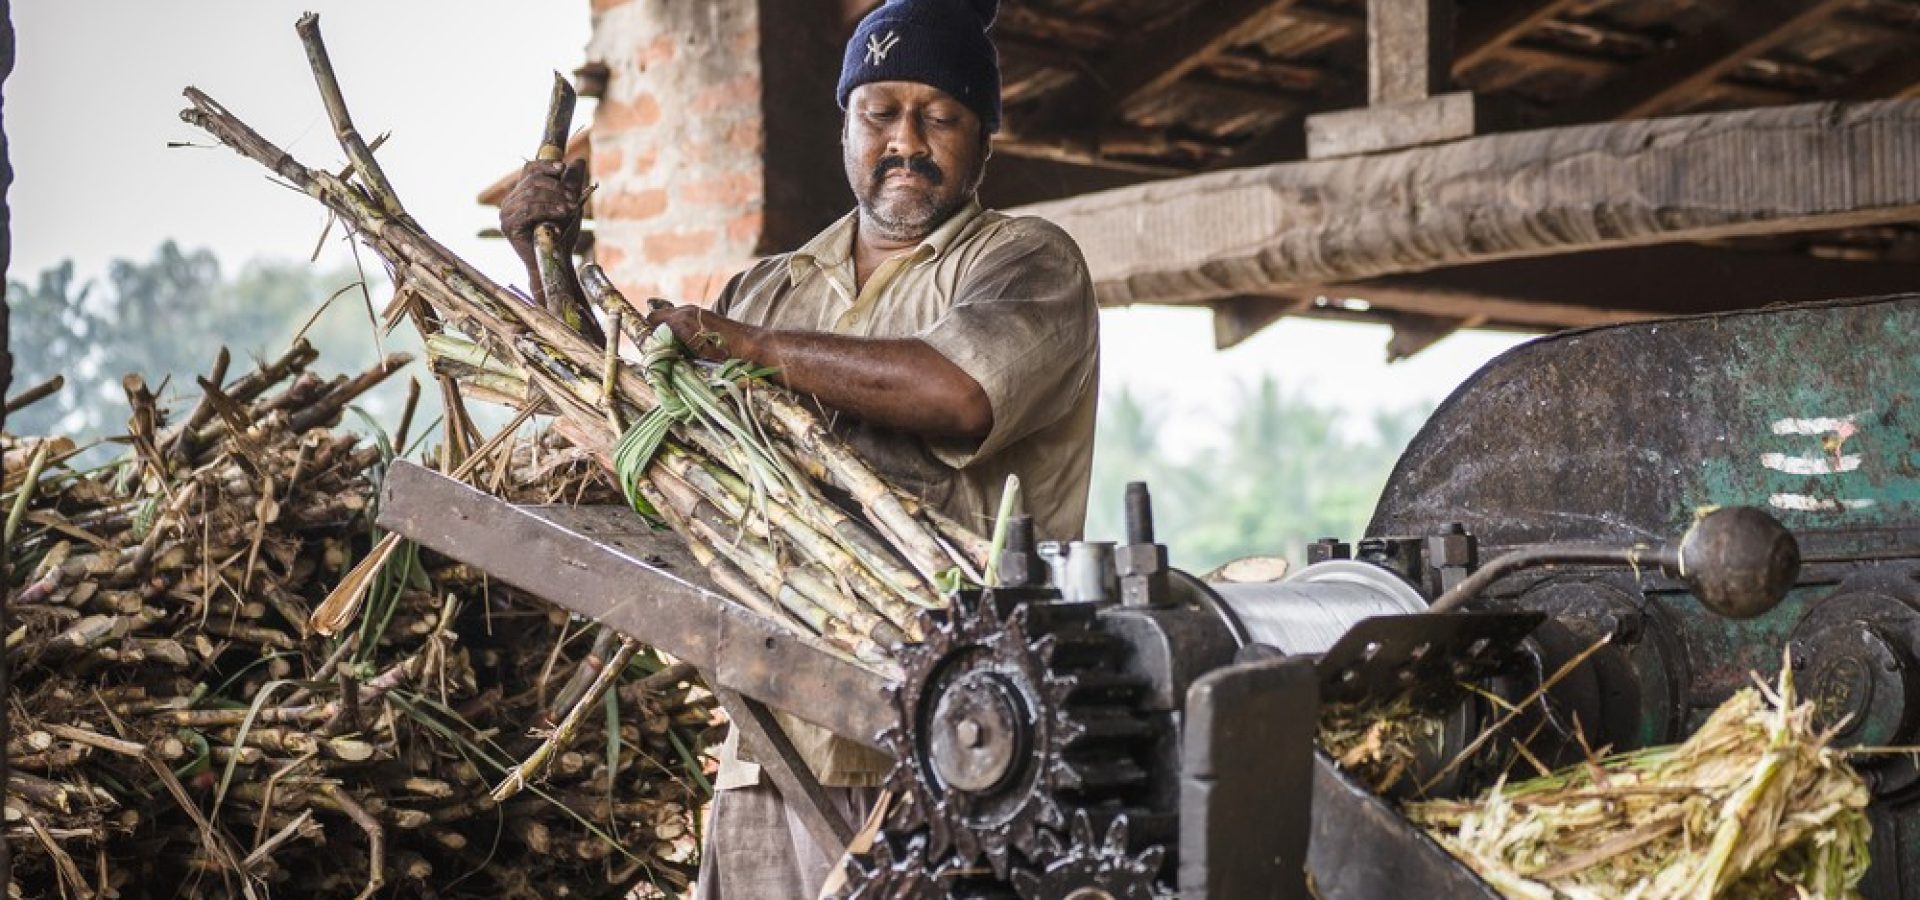 India's sugar production dropped sharply